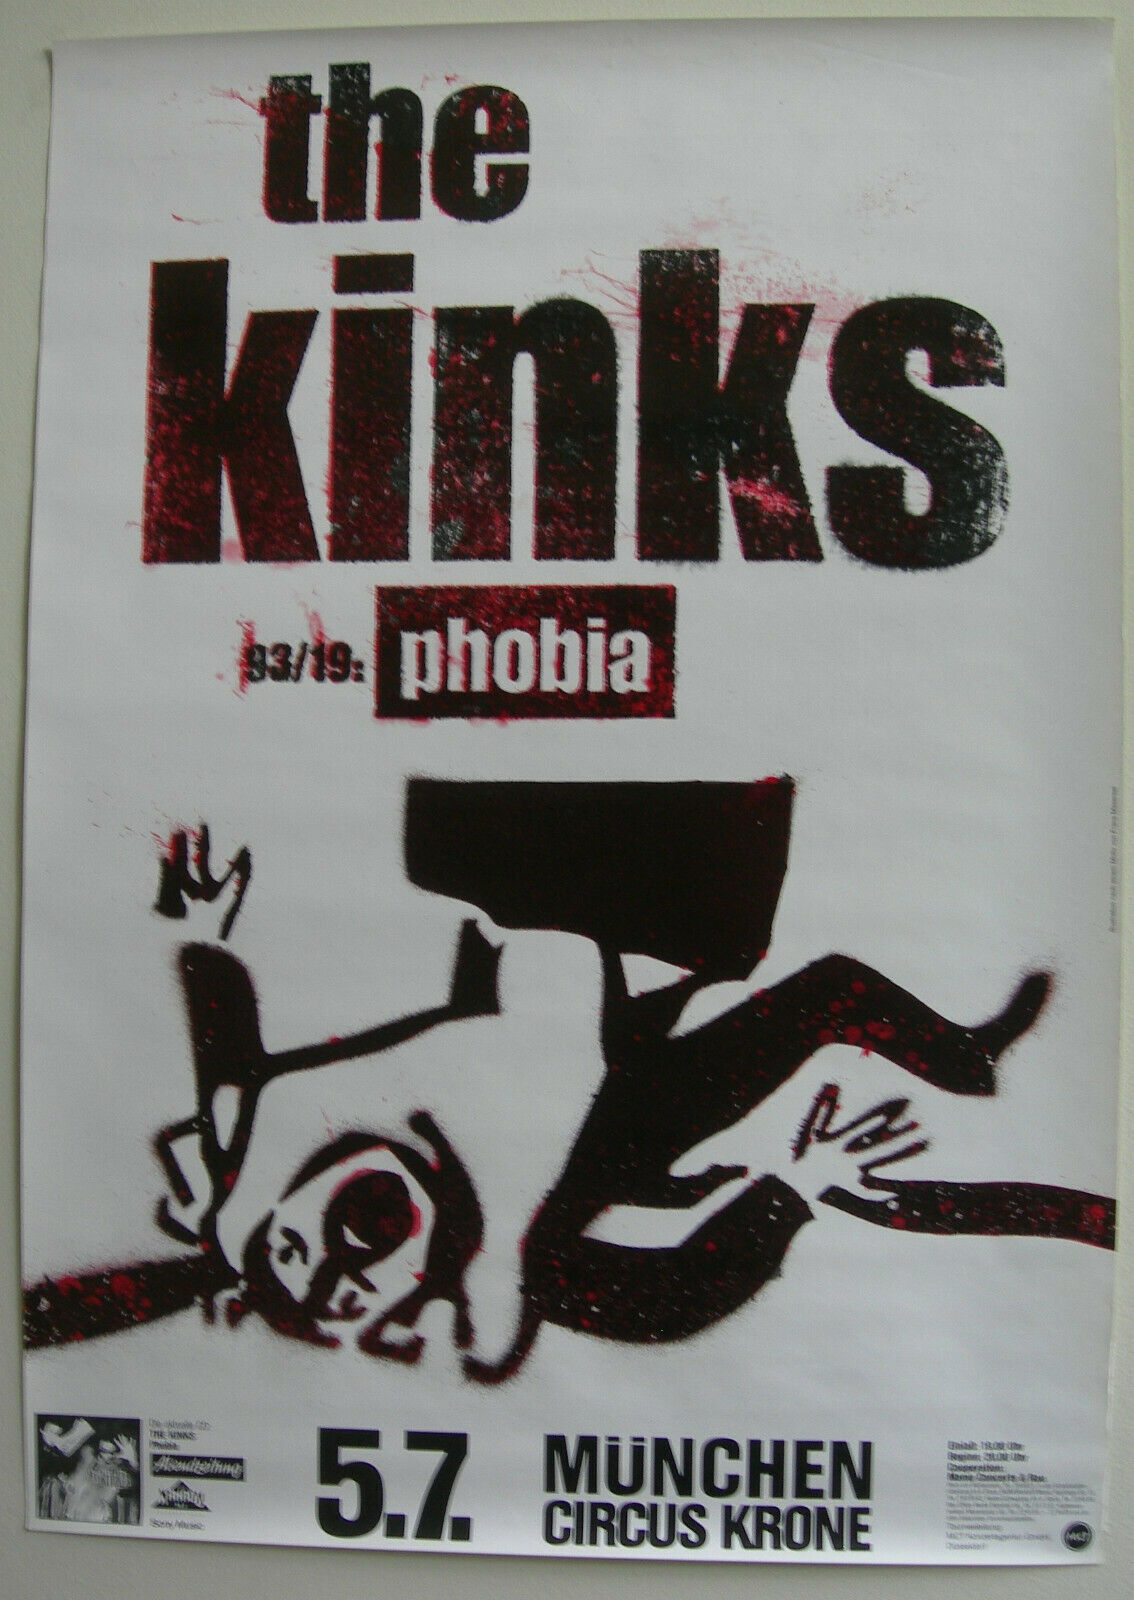 The Kinks Concert Tour Poster 1993 Phobia